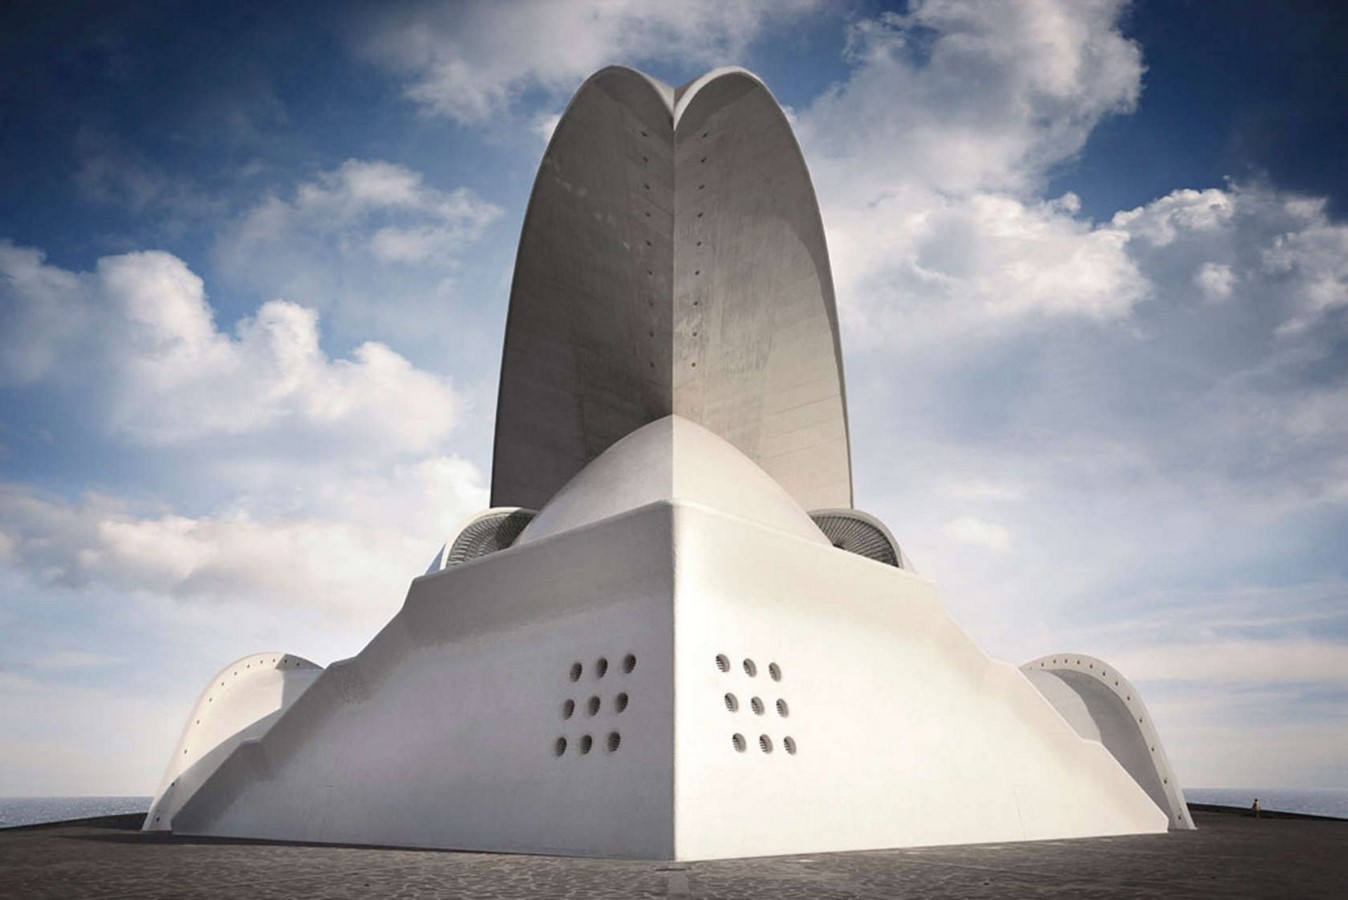 Auditorio de Tenerife Adán Martín by Santiago Calatrava: The great Arc - Sheet6